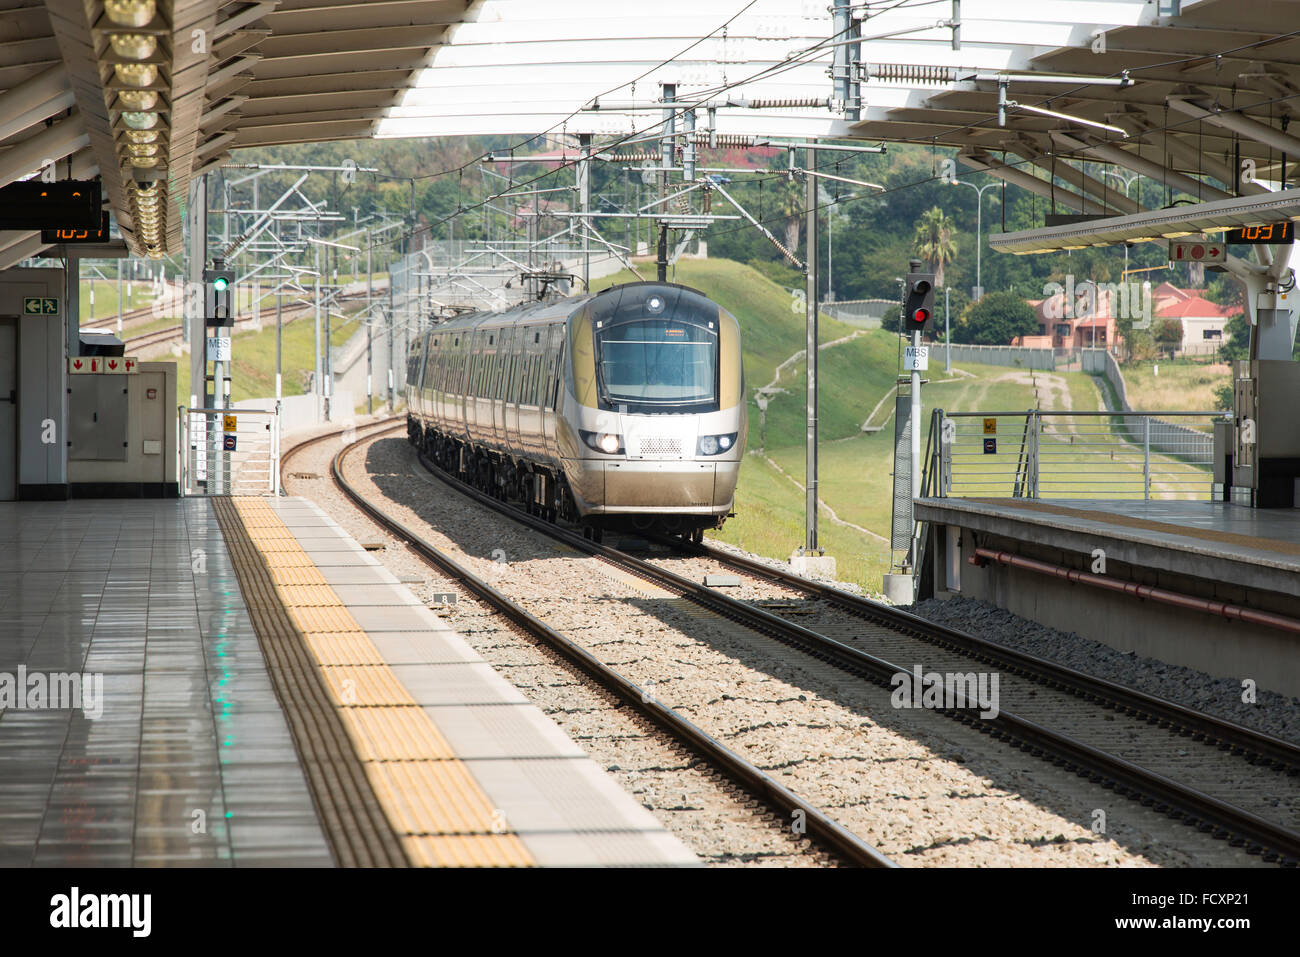 Train arriving at Marlboro Gautrain Station, Marlboro, Sandton, City of Johannesburg, Gauteng Province, Republic of South Africa Stock Photo